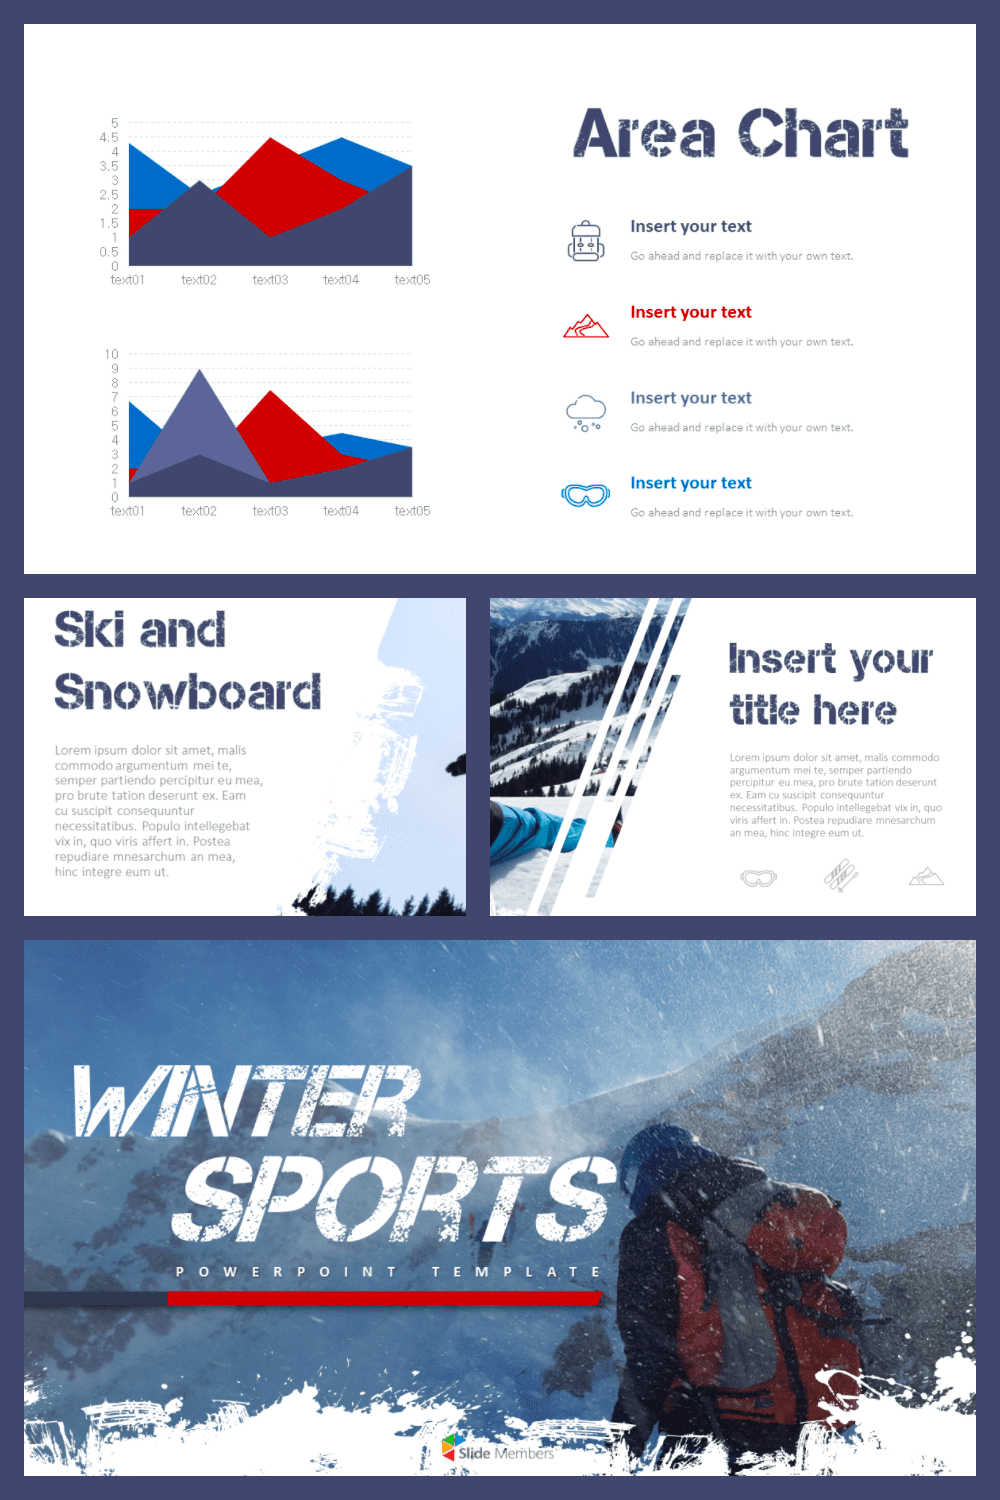 Winter sports template design.